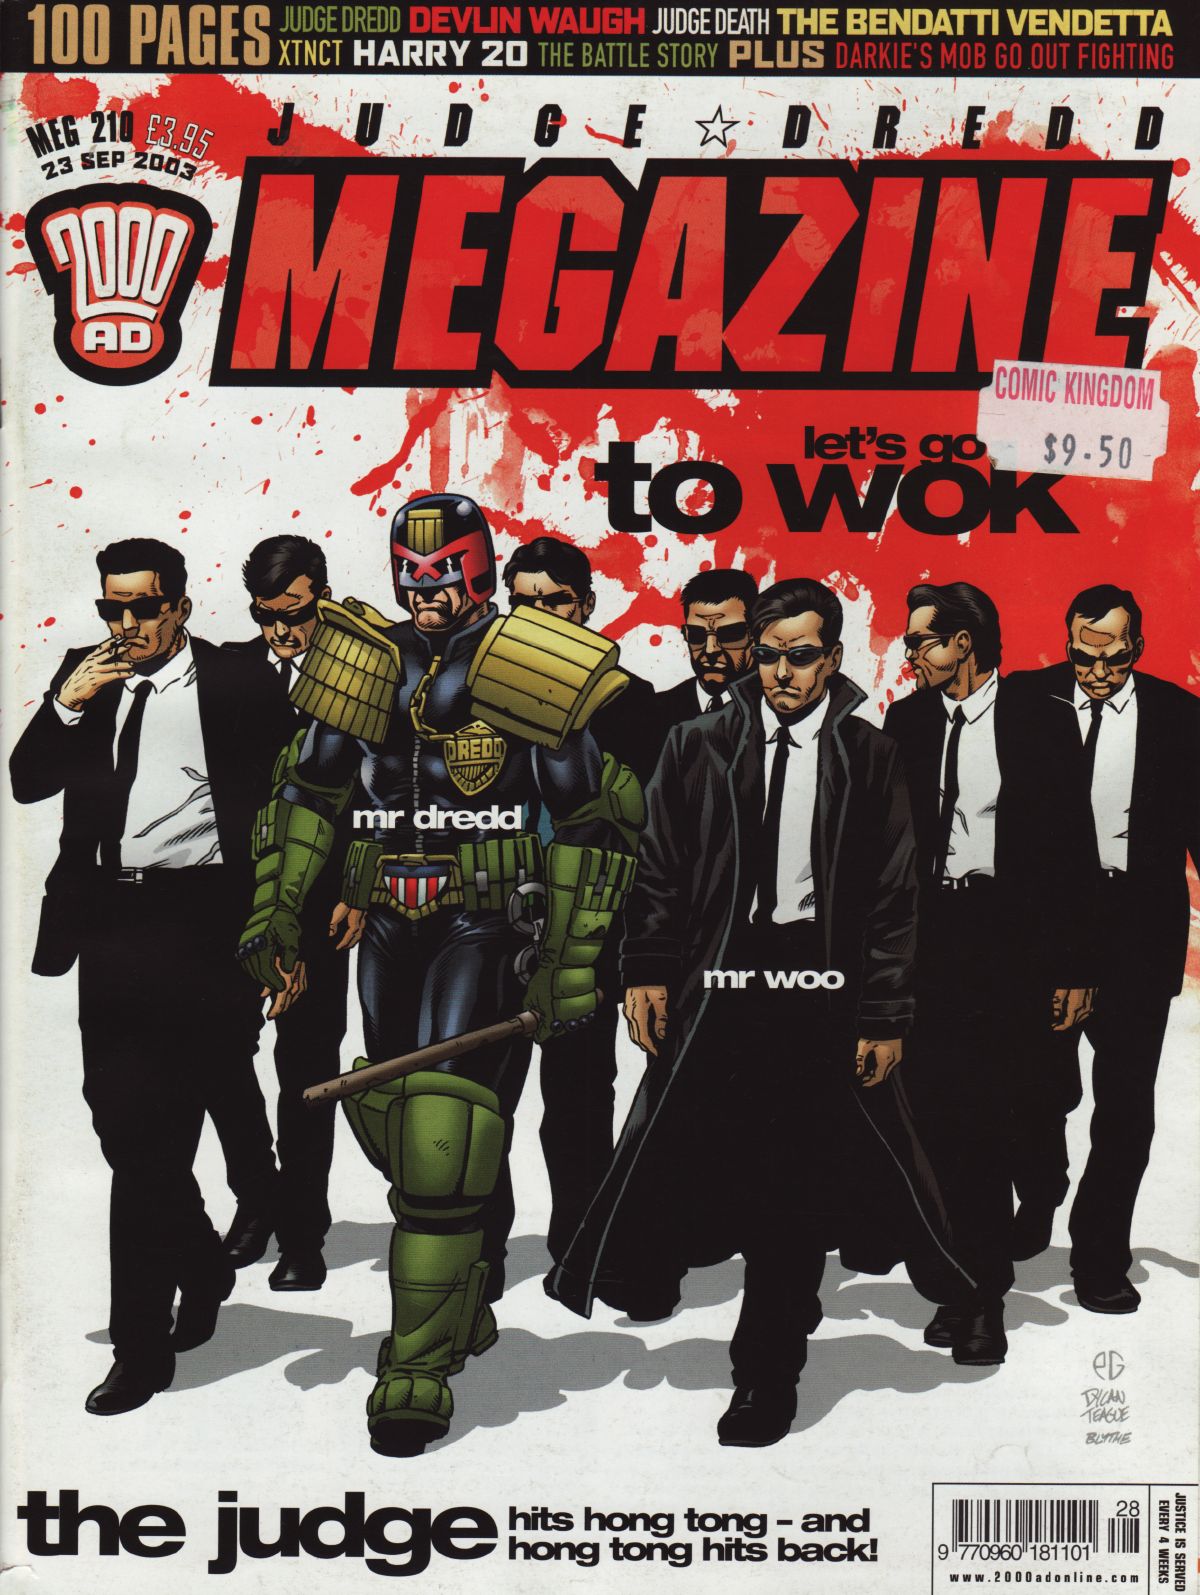 Judge Dredd Megazine (Vol. 5) issue 210 - Page 1